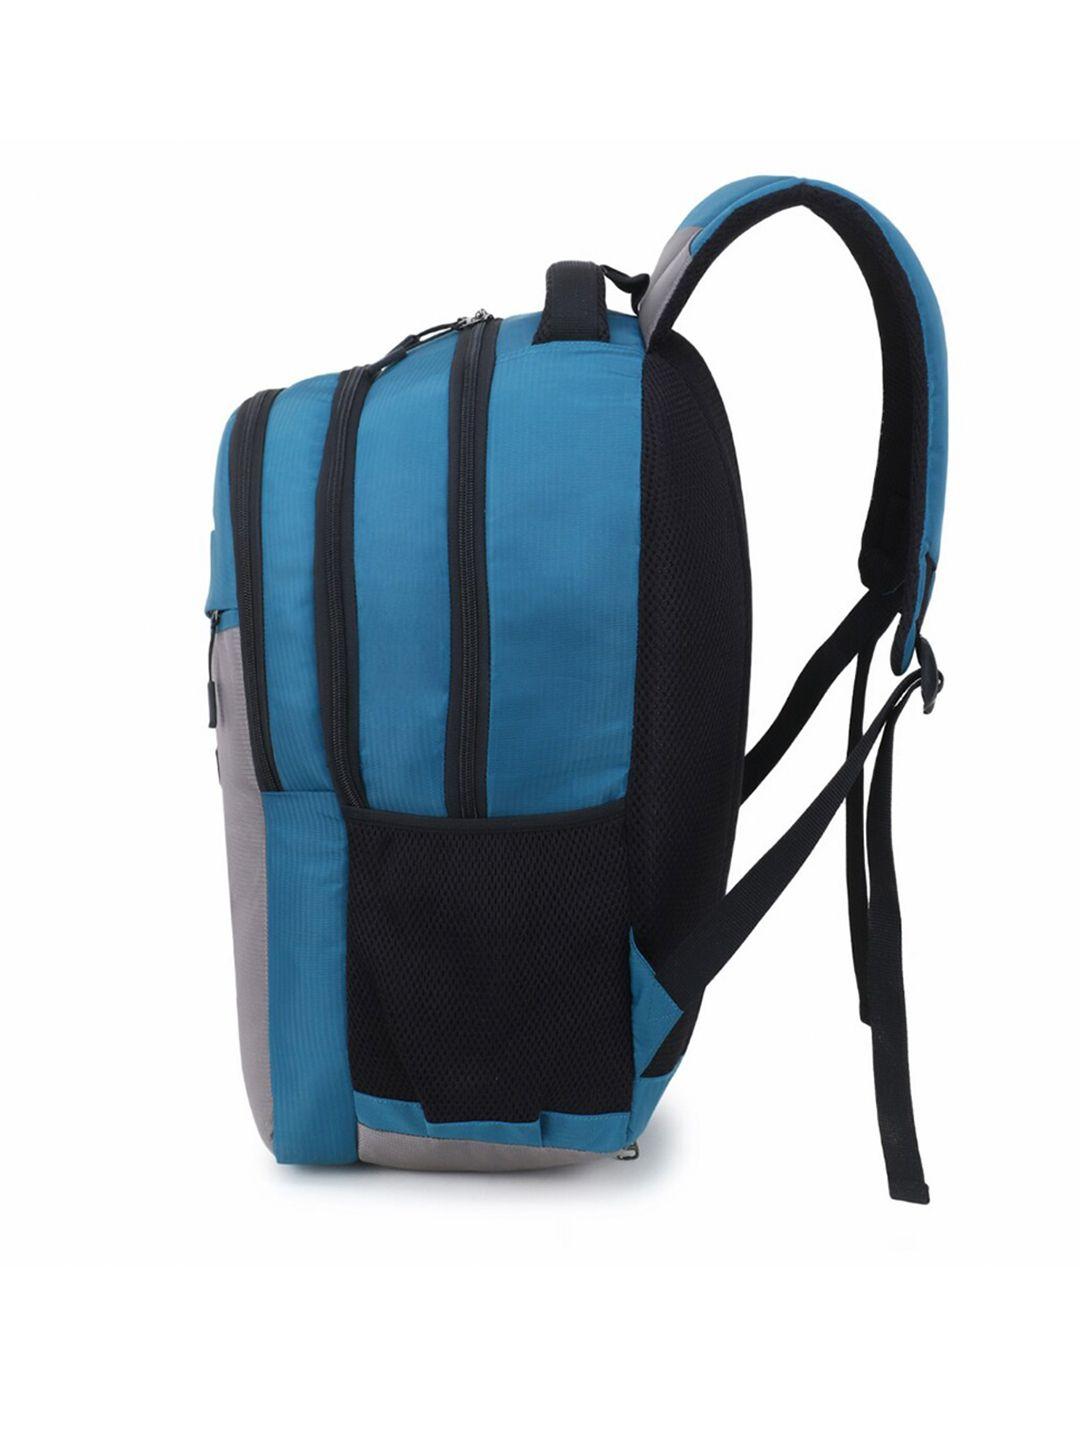 lookmuster unisex blue & grey colourblocked backpack